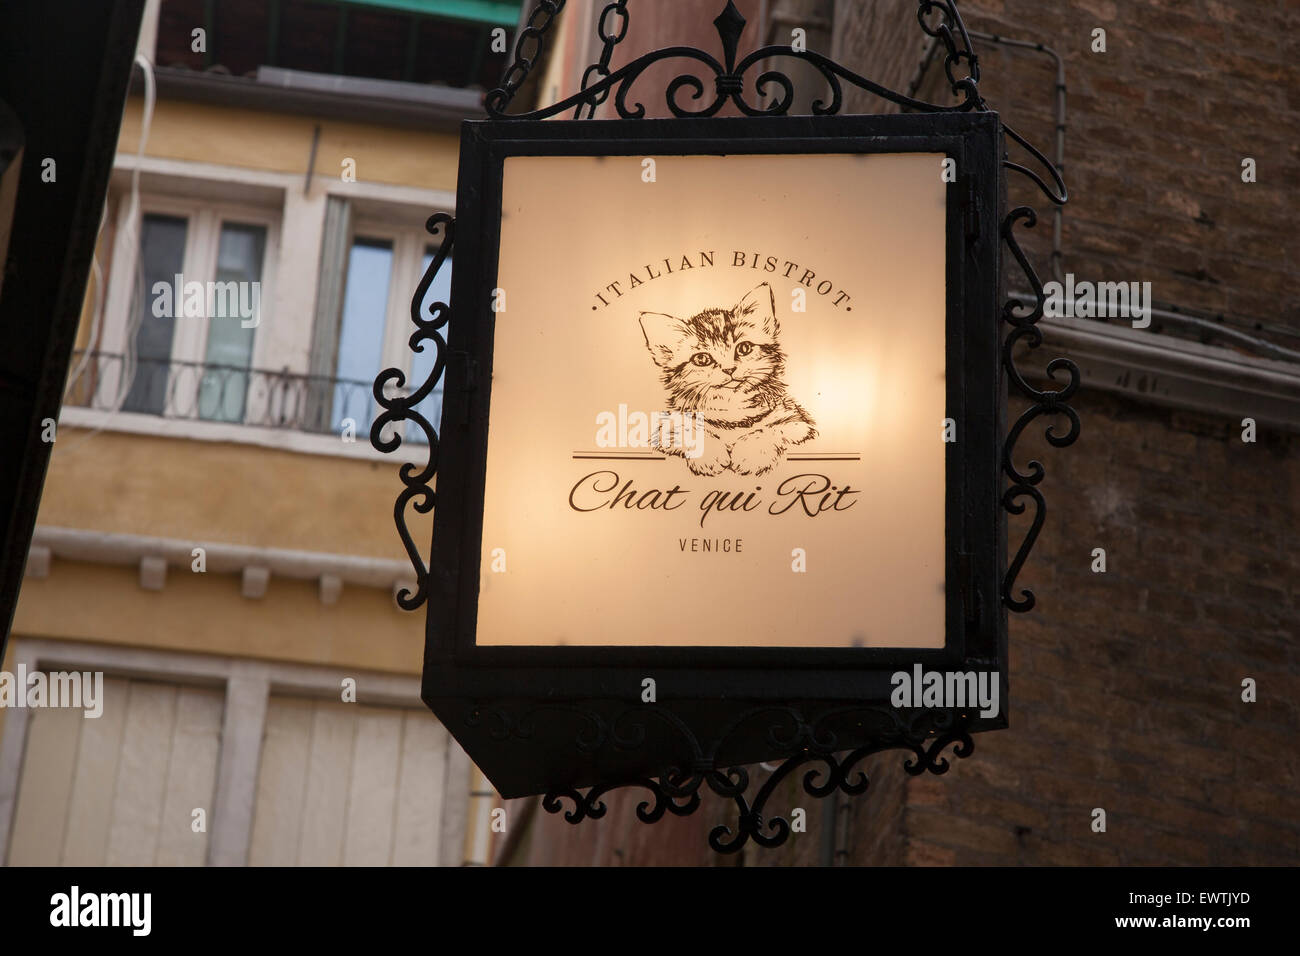 Chat Qui Rit Restaurant Sign Venice Italy Stock Photo Alamy